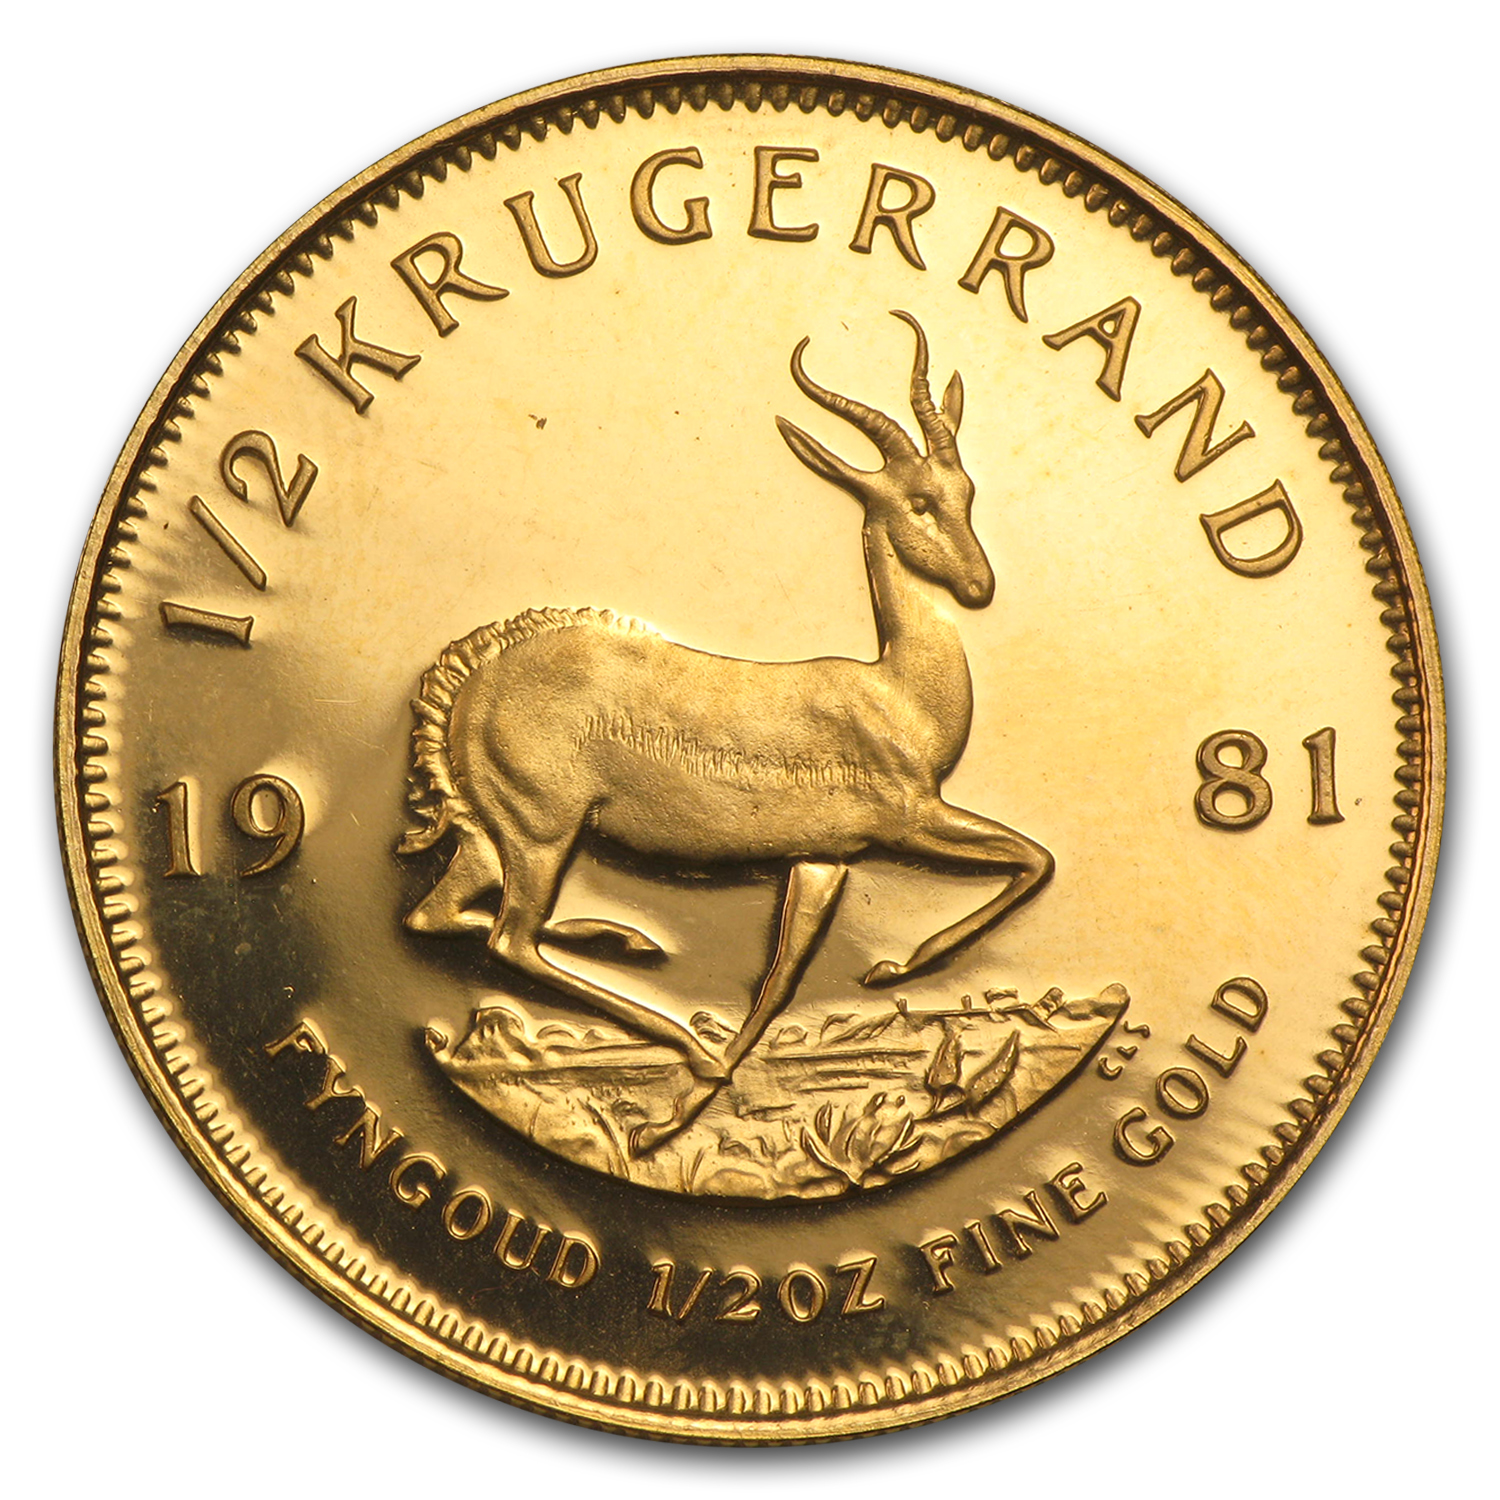 Buy 1981 South Africa 1/2 oz Gold Krugerrand - Click Image to Close